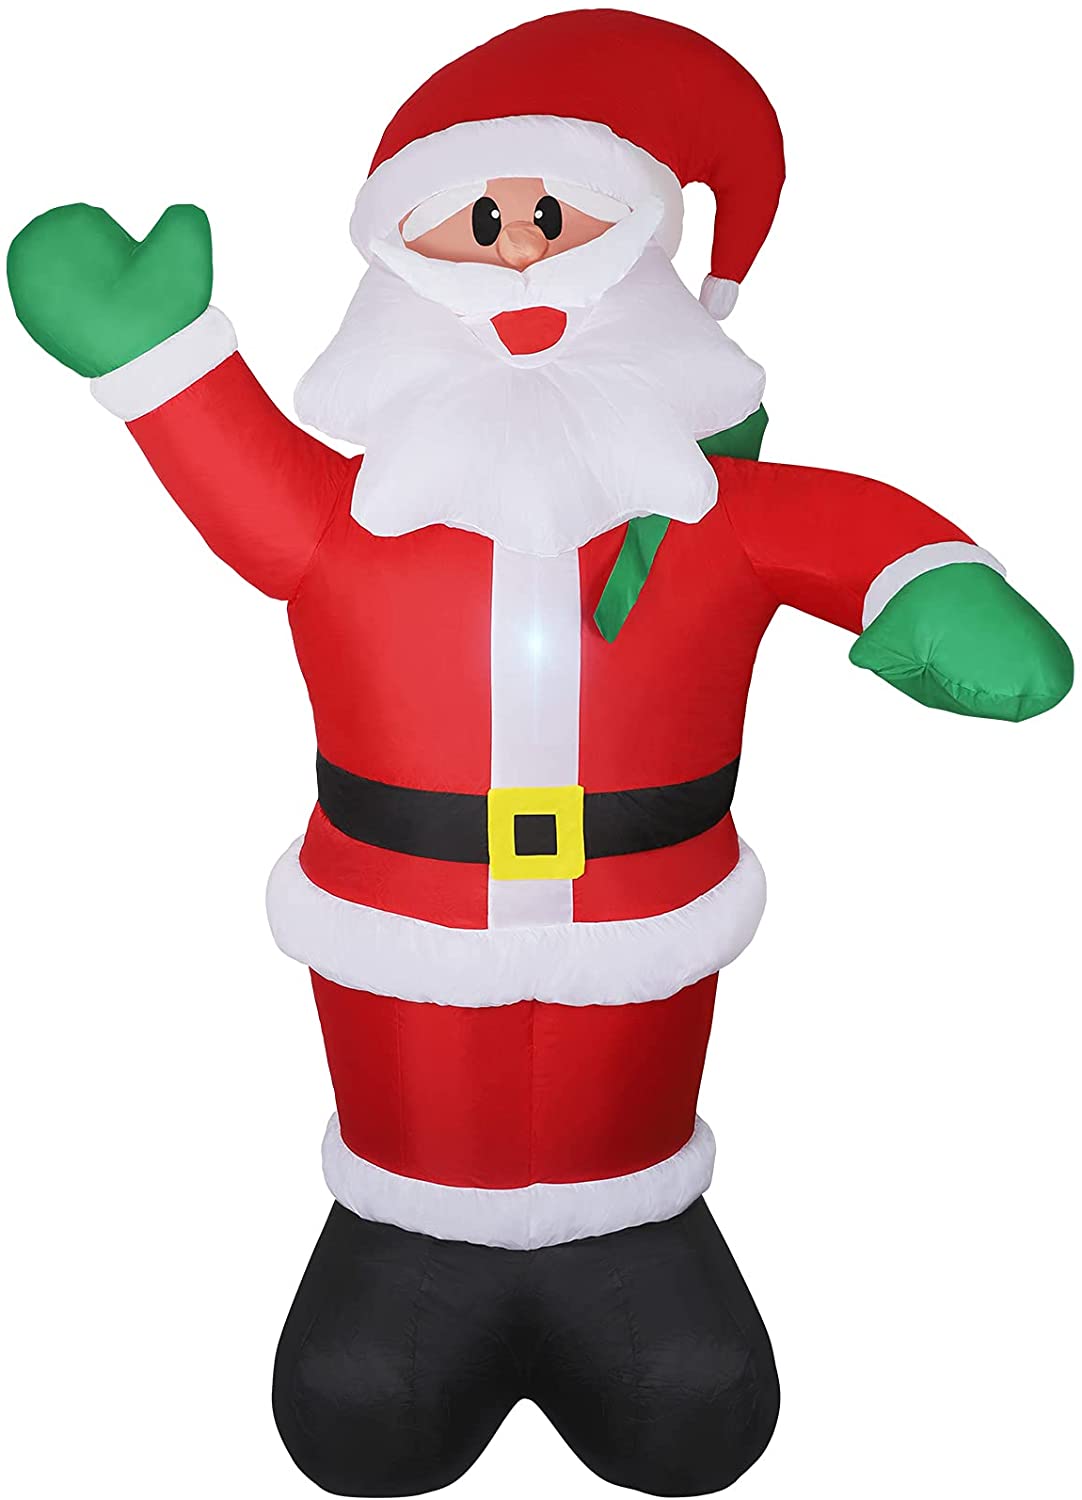 DOUBLE SAVINGS on Inflatable Santa! RUN!